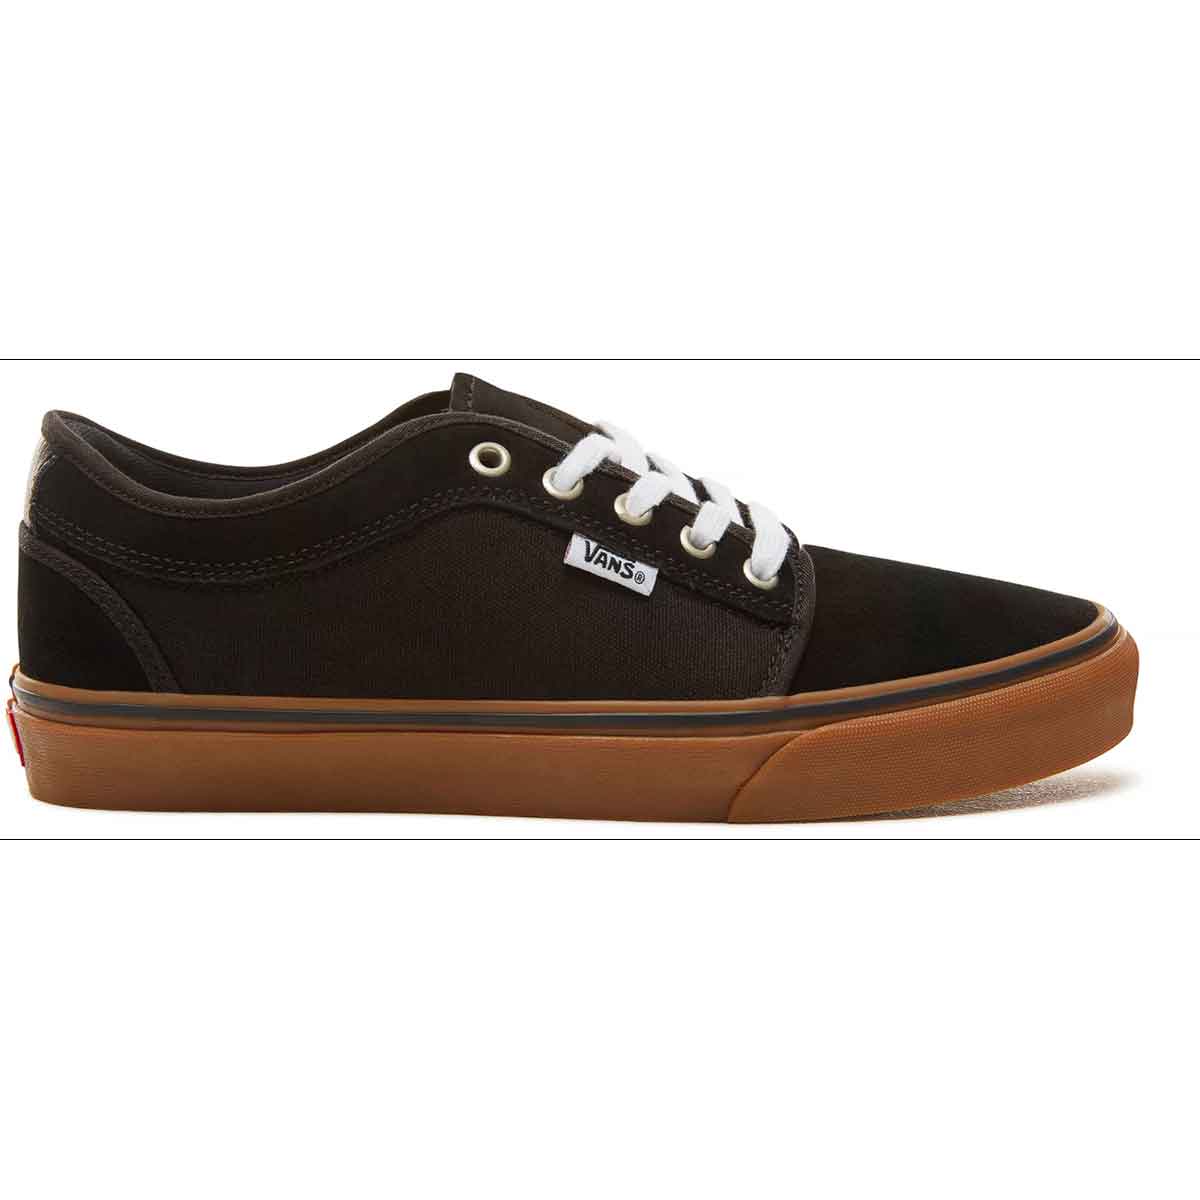 Vans Chukka Low Skate Shoes - Black/Gum 